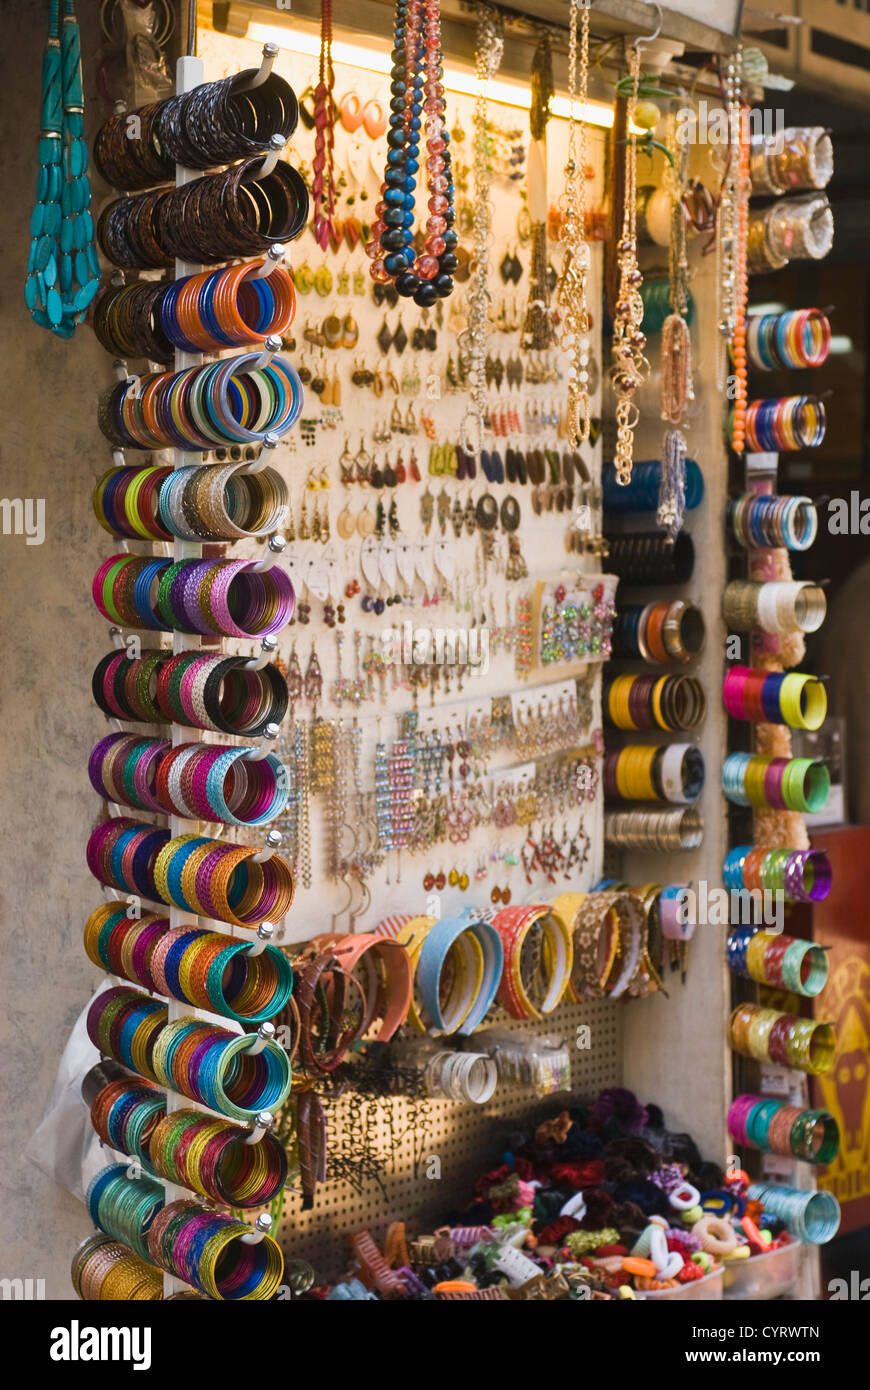 Jewelry stall in a street market, New Delhi, India Stock Photo